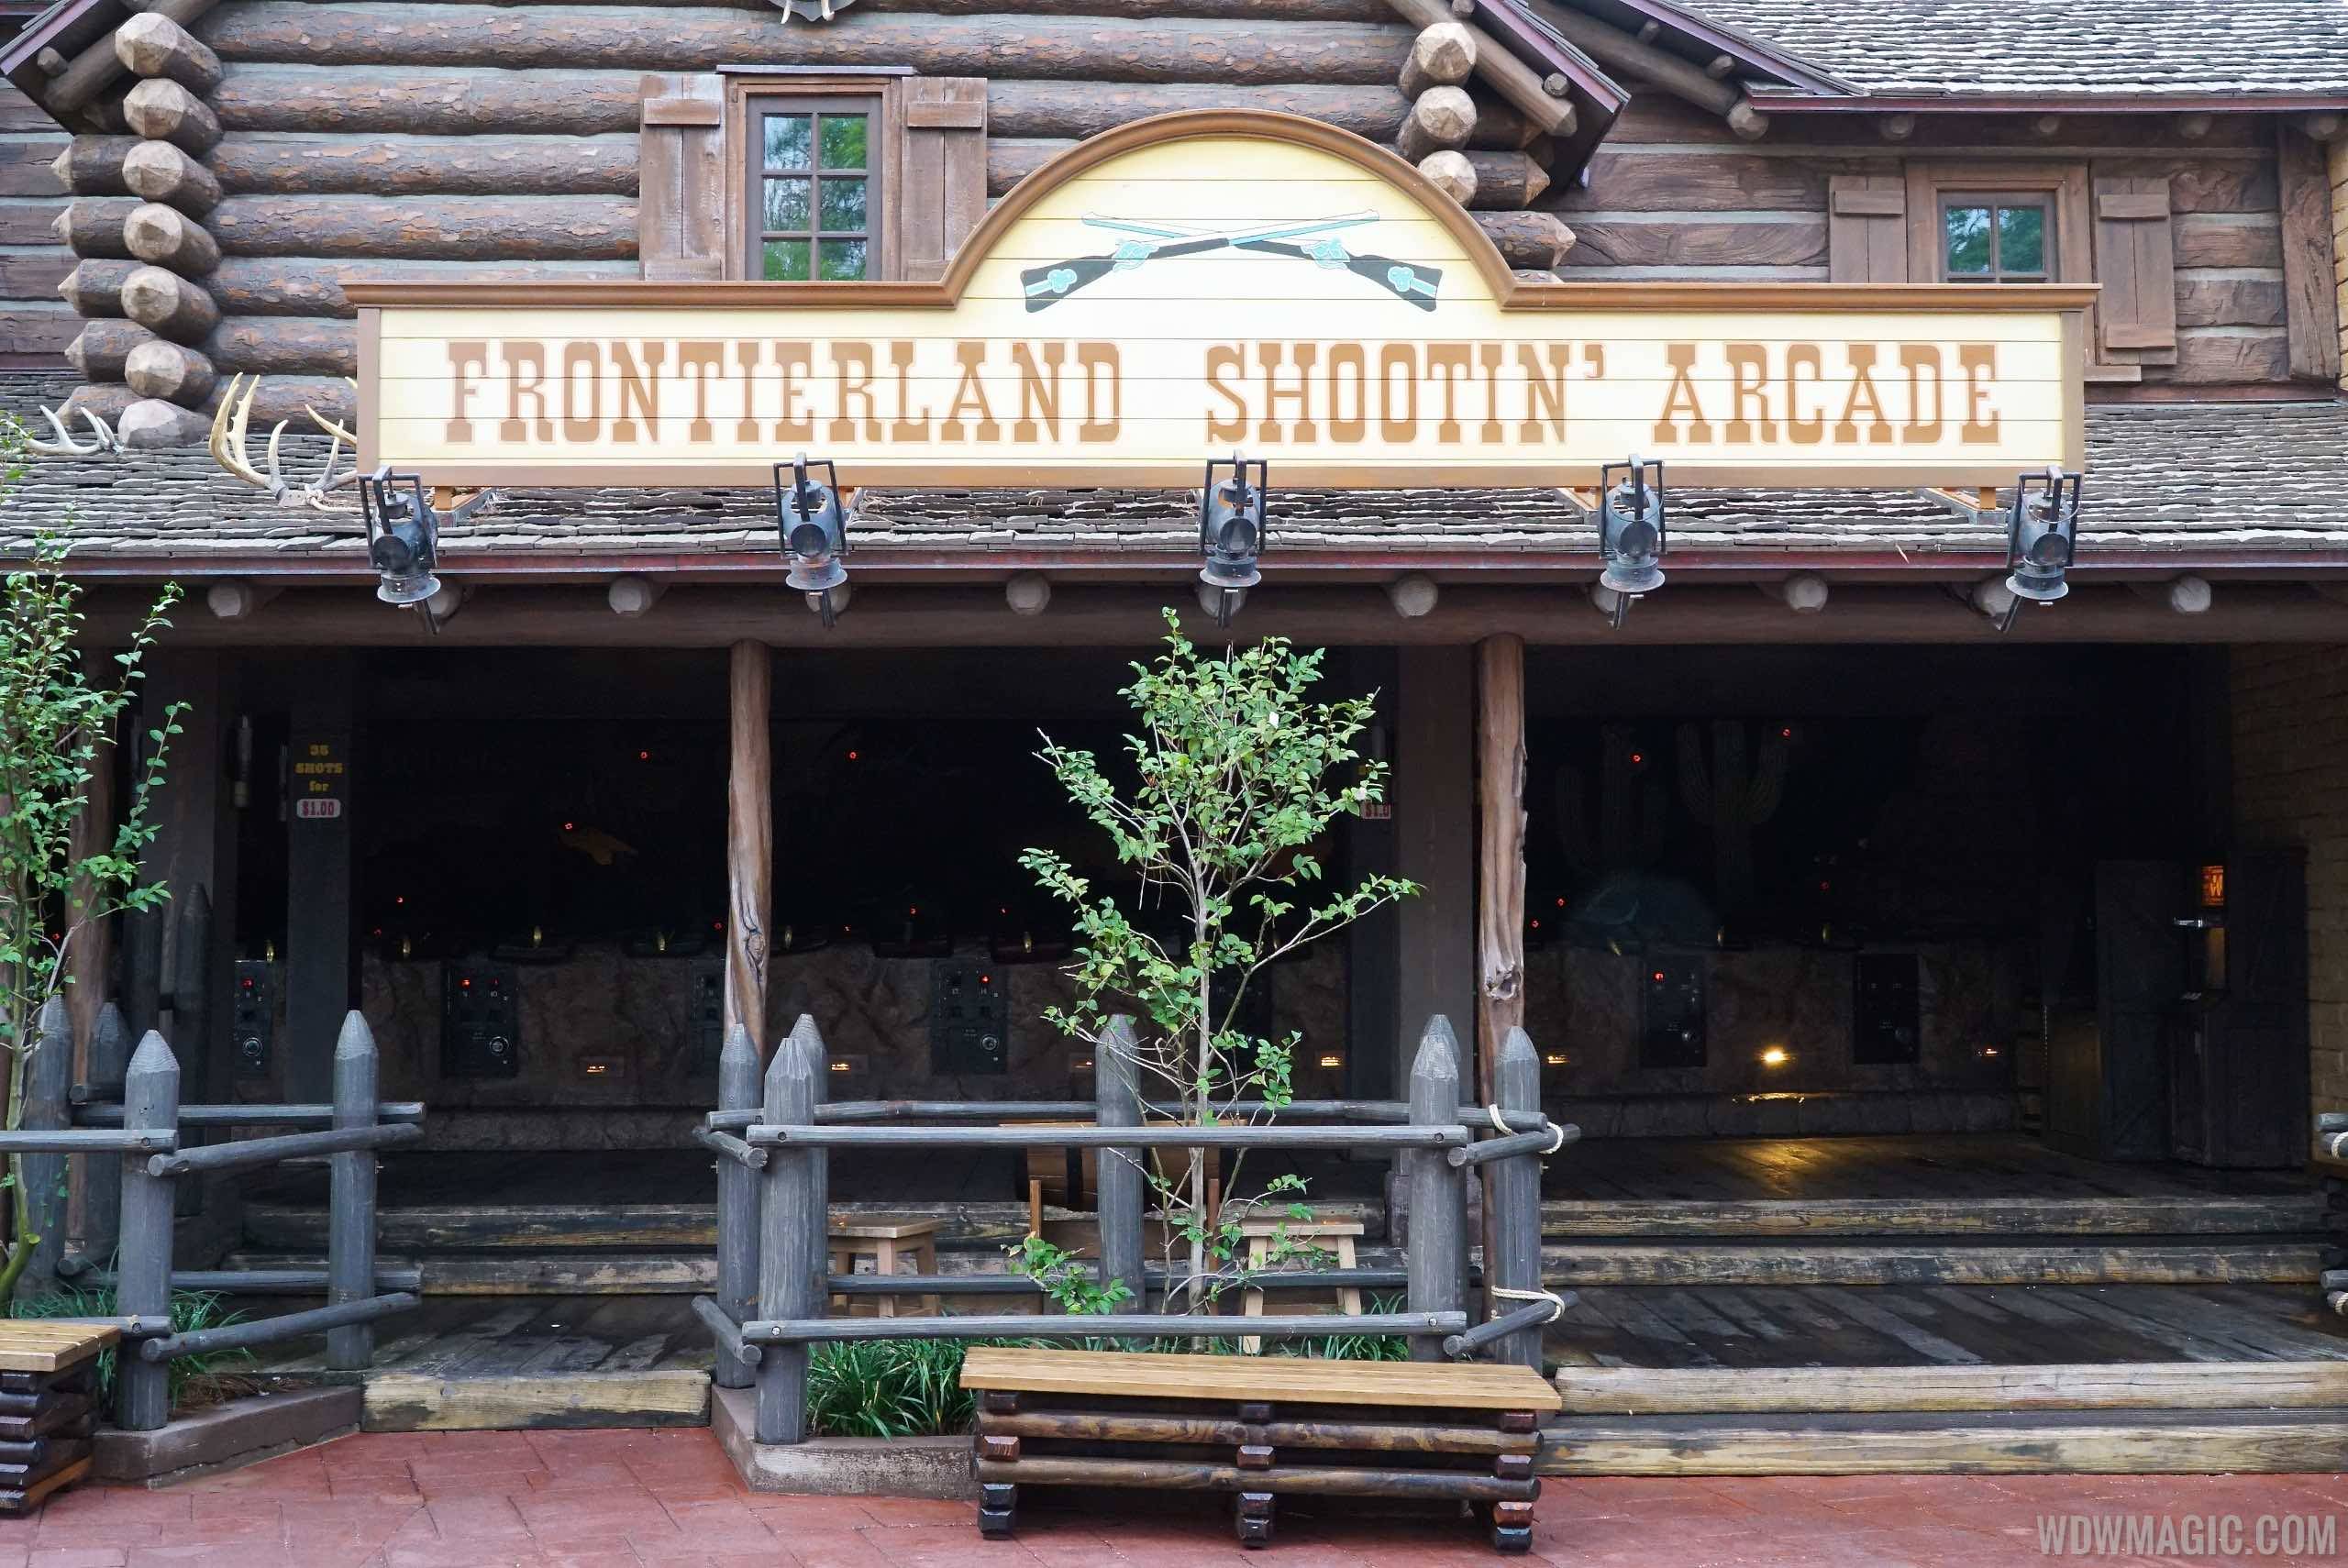 Frontierland Shootin' Arcade